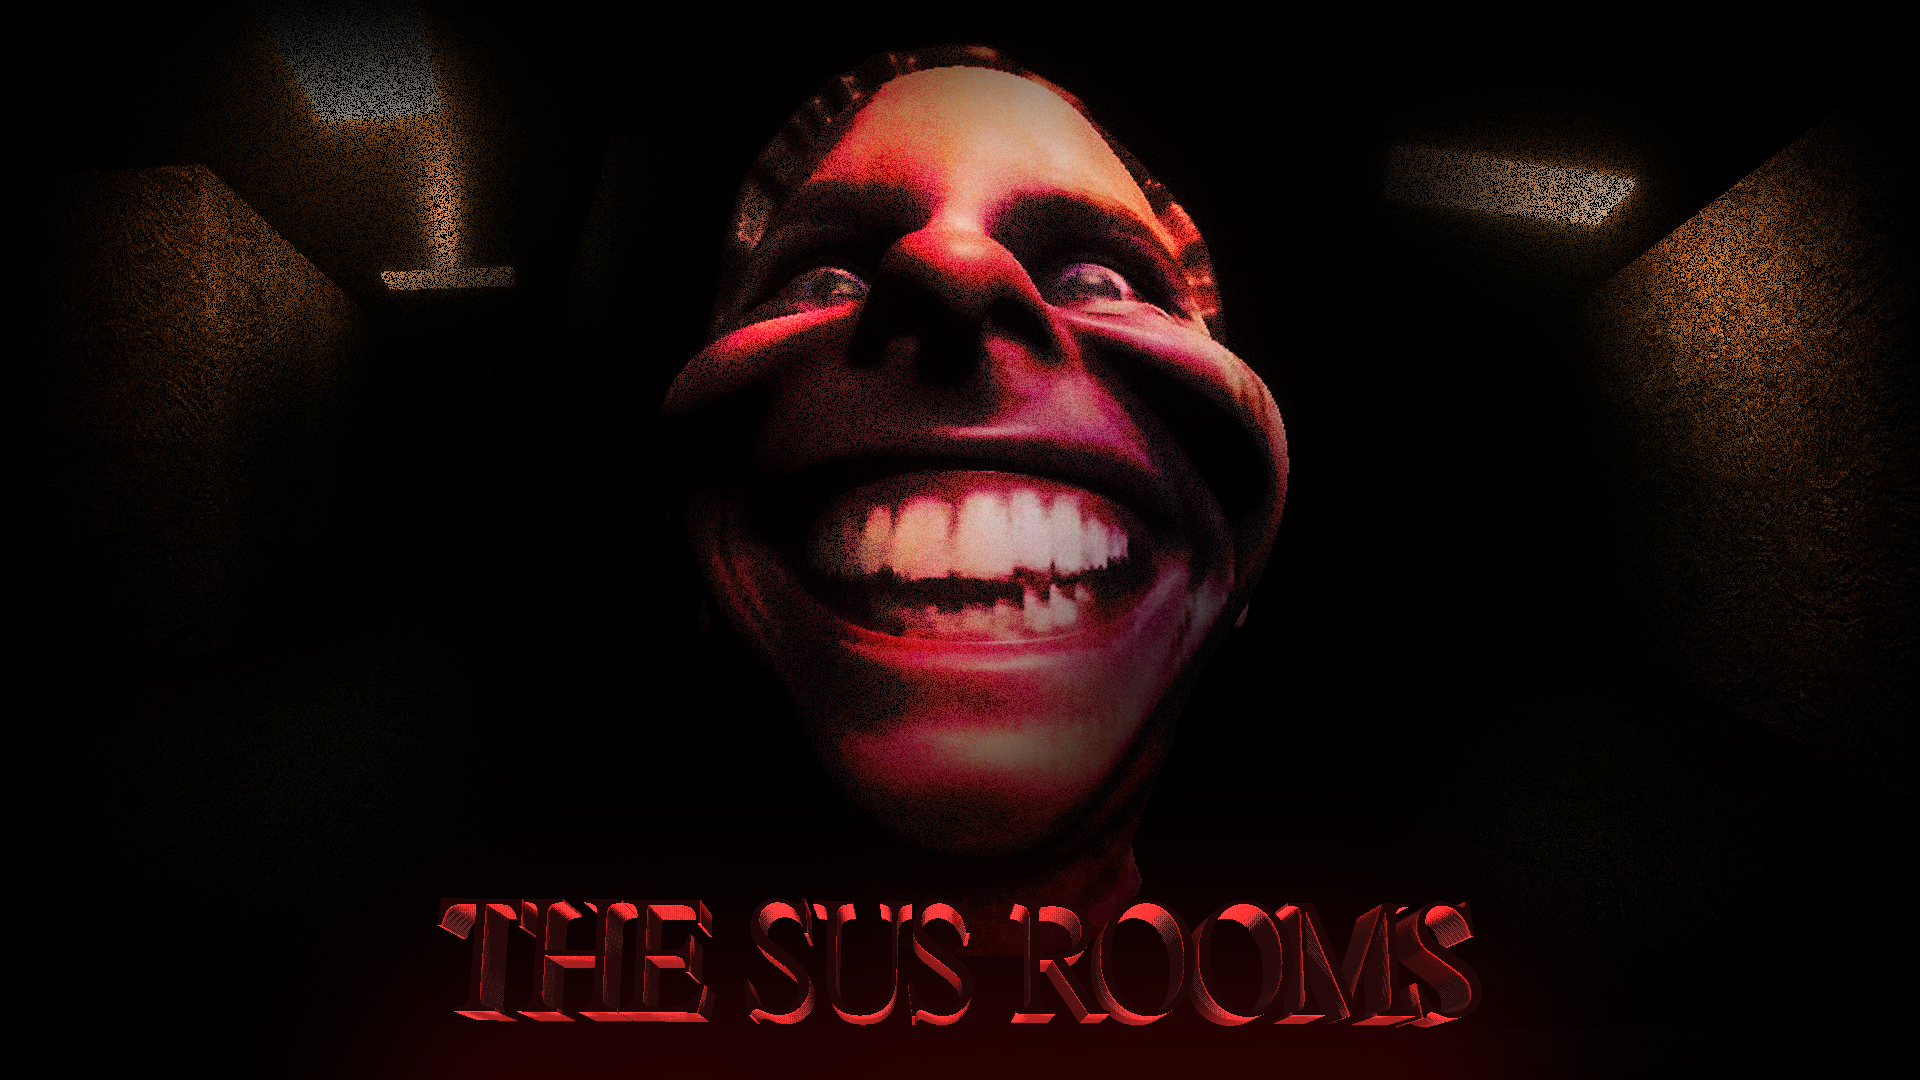 THE SUS ROOMS